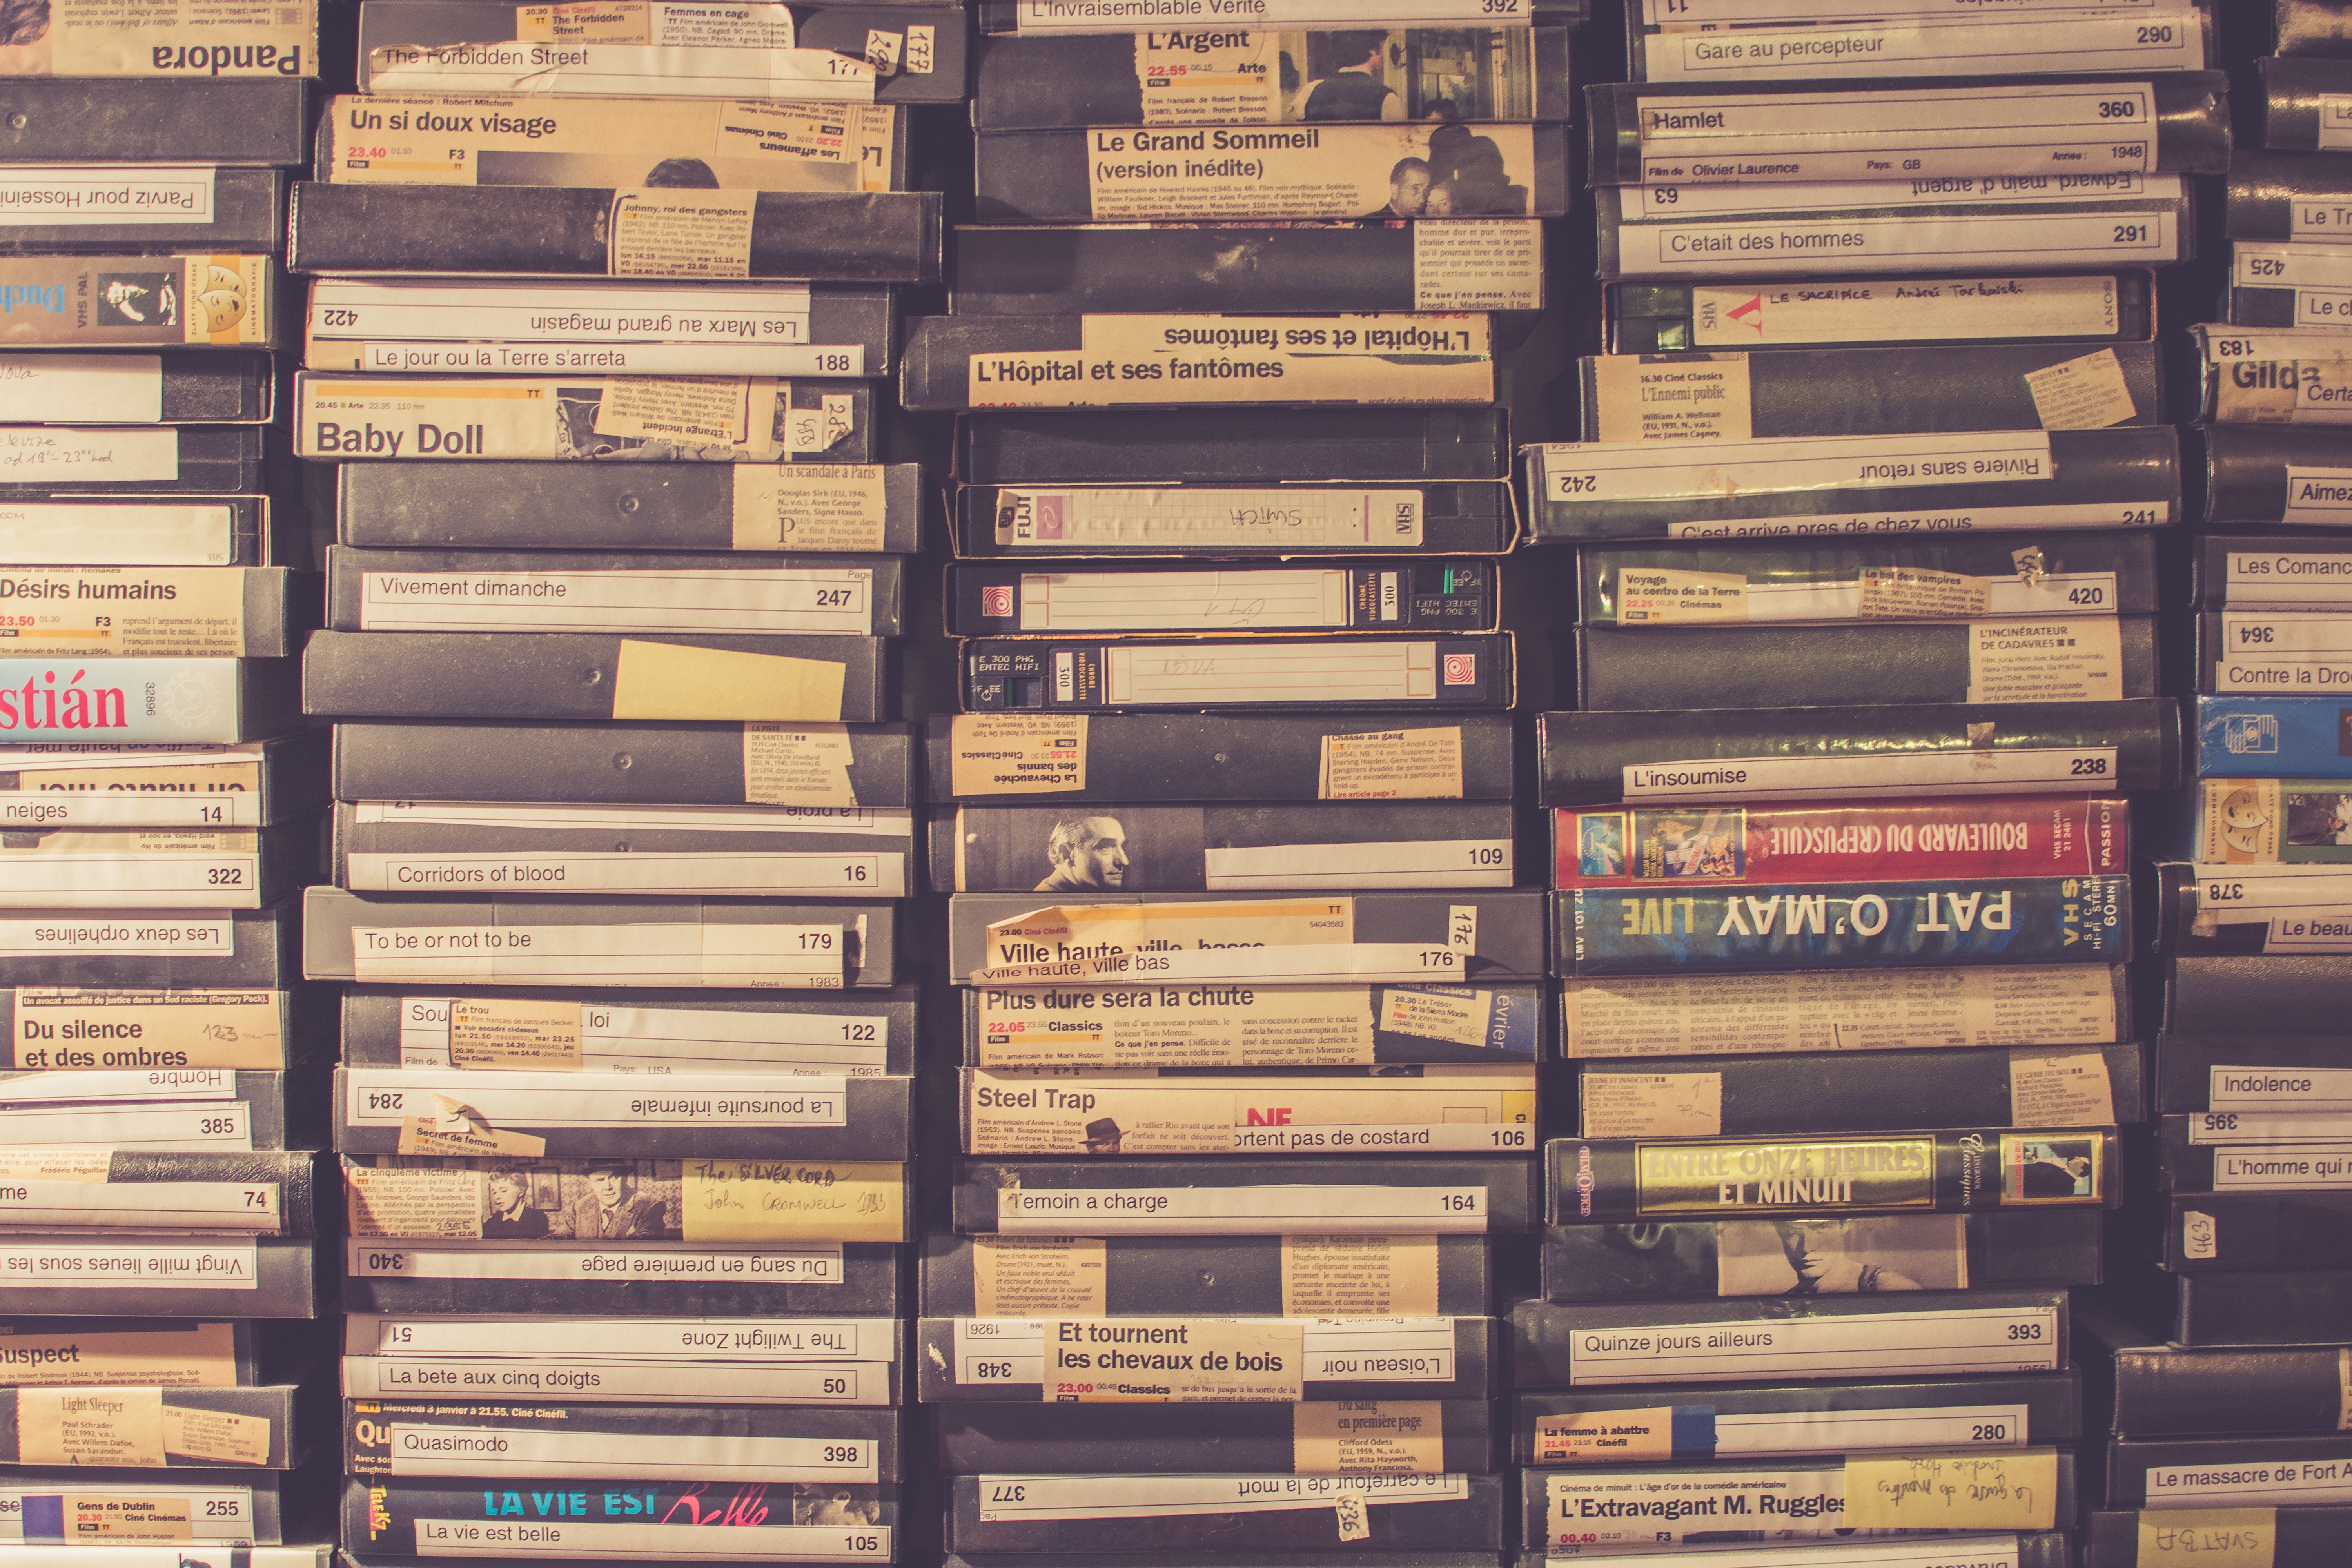 KRAVIT OÜ - Rental of video tapes and disks in Estonia